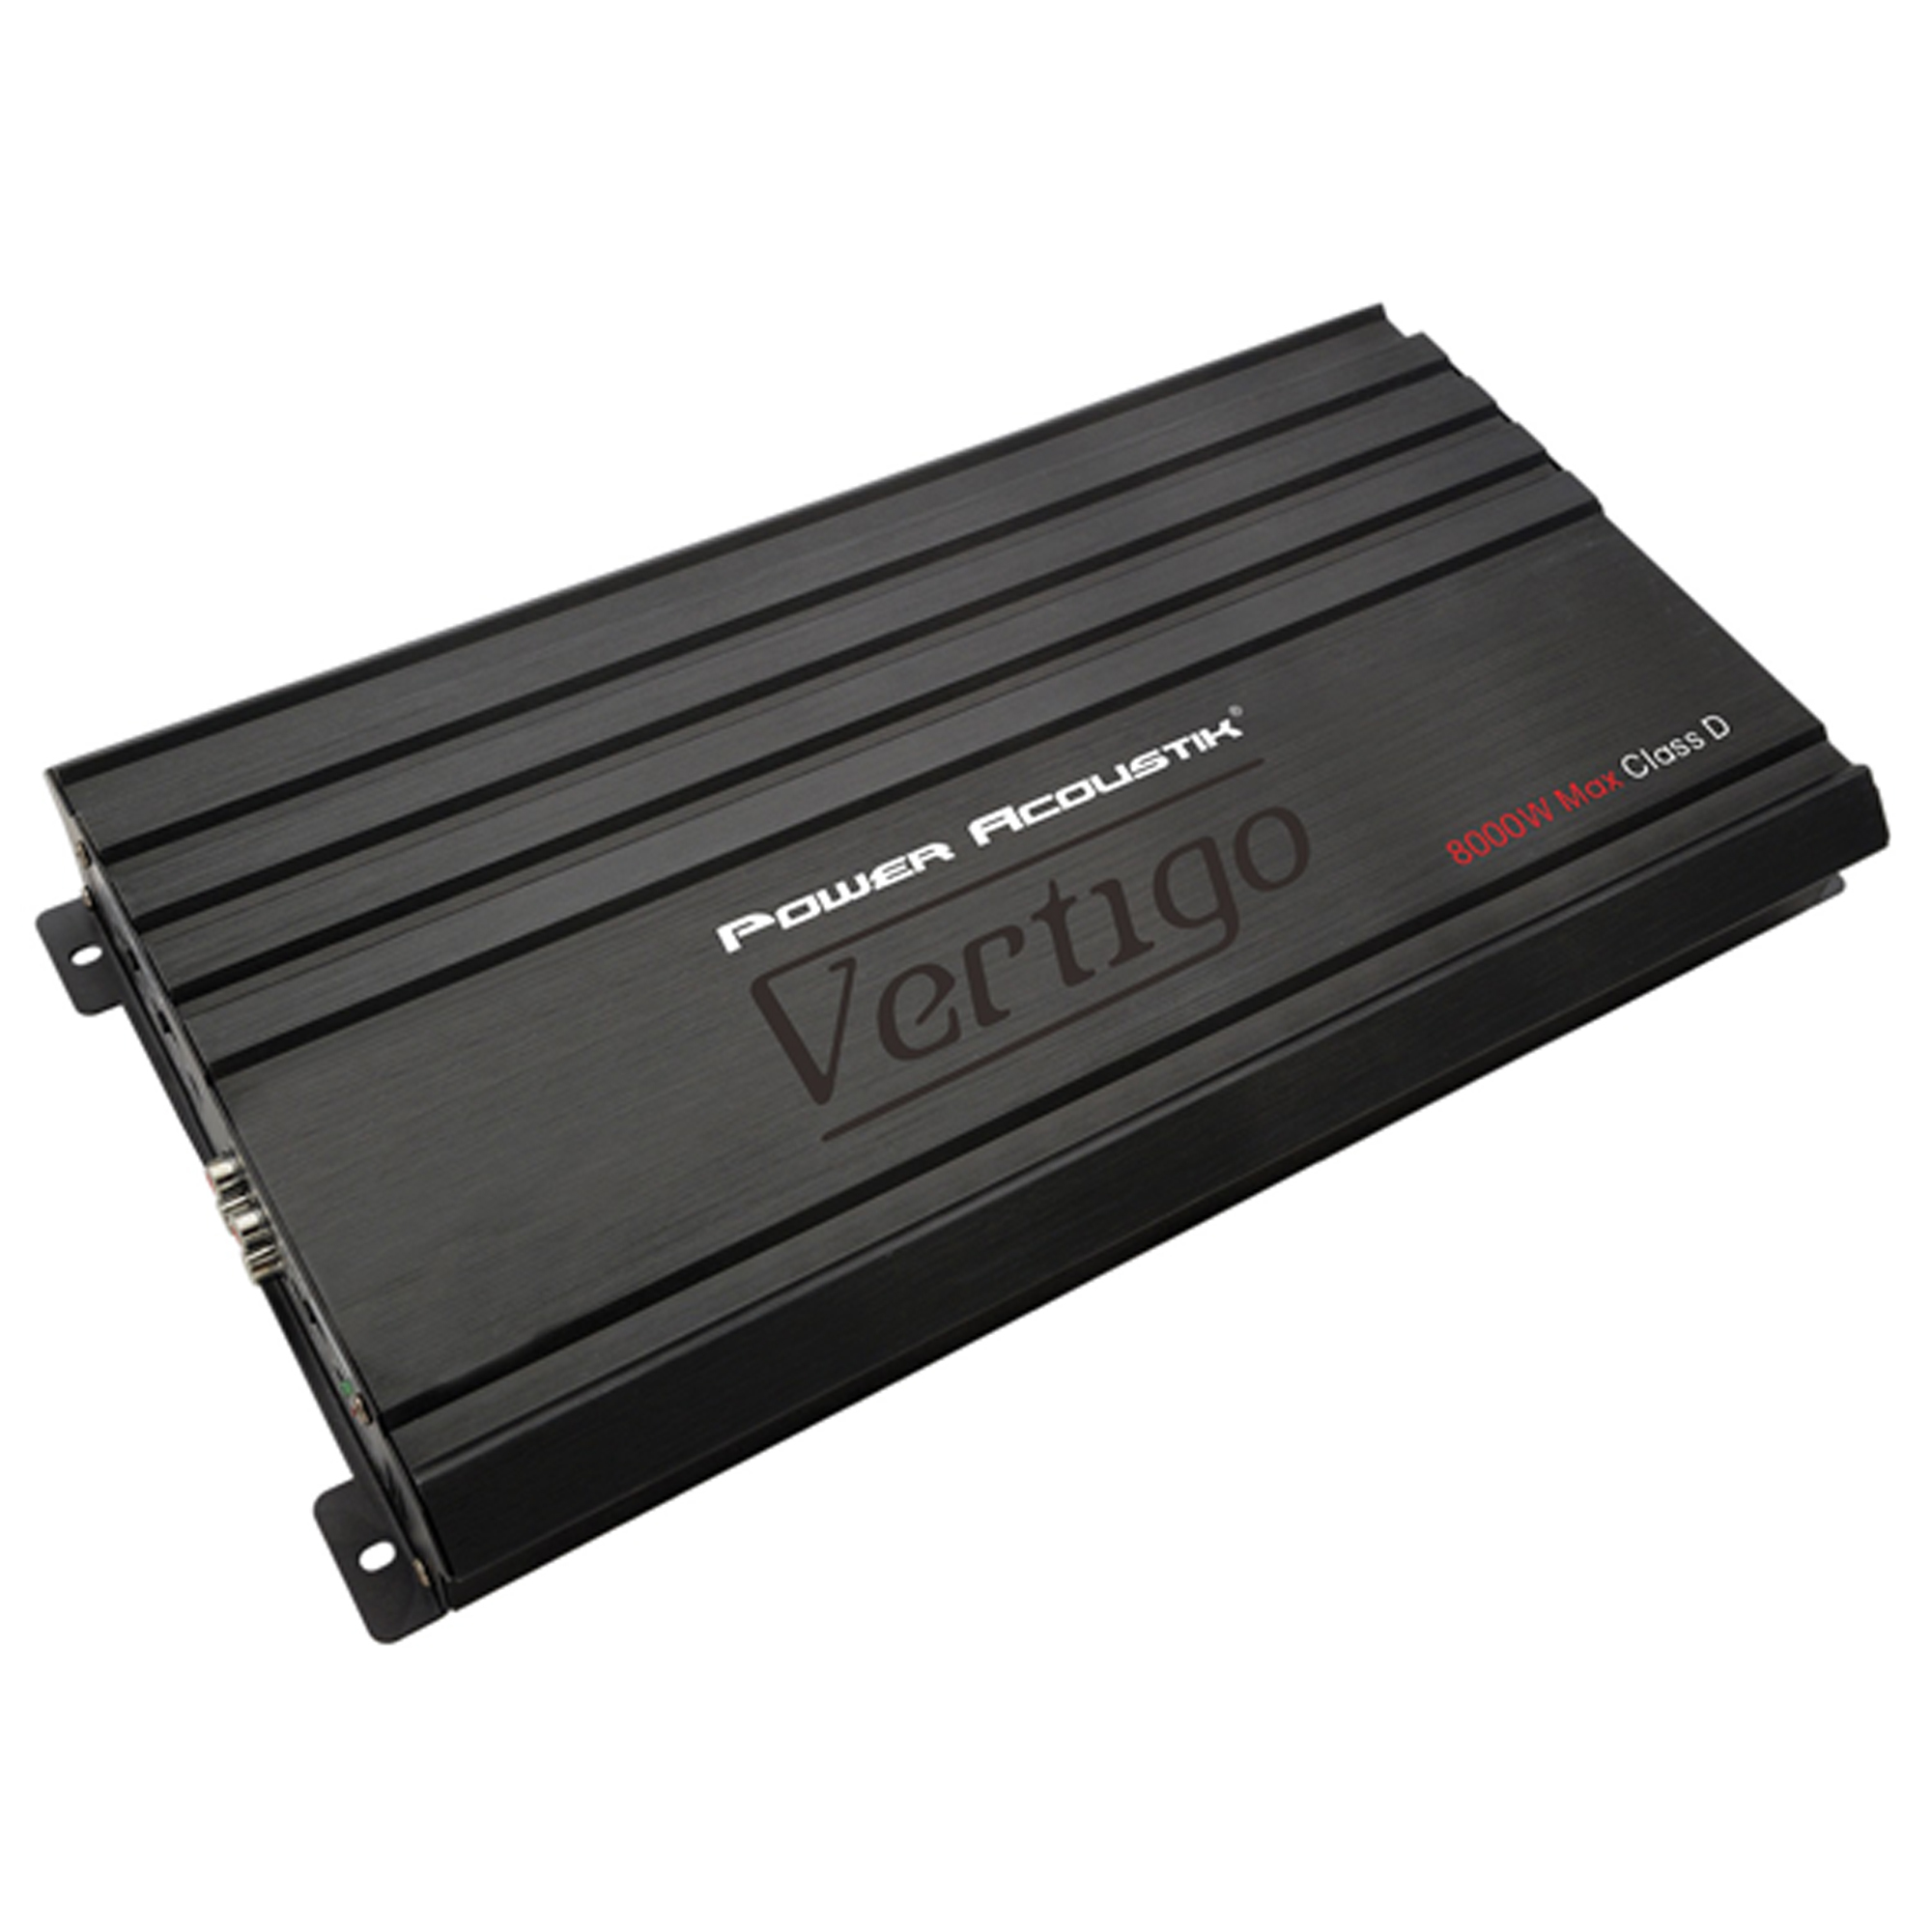 Power Acoustik Vertigo Series, Monoblock 12-Volt Class D Audio Amplifier, Model VA1-8000D